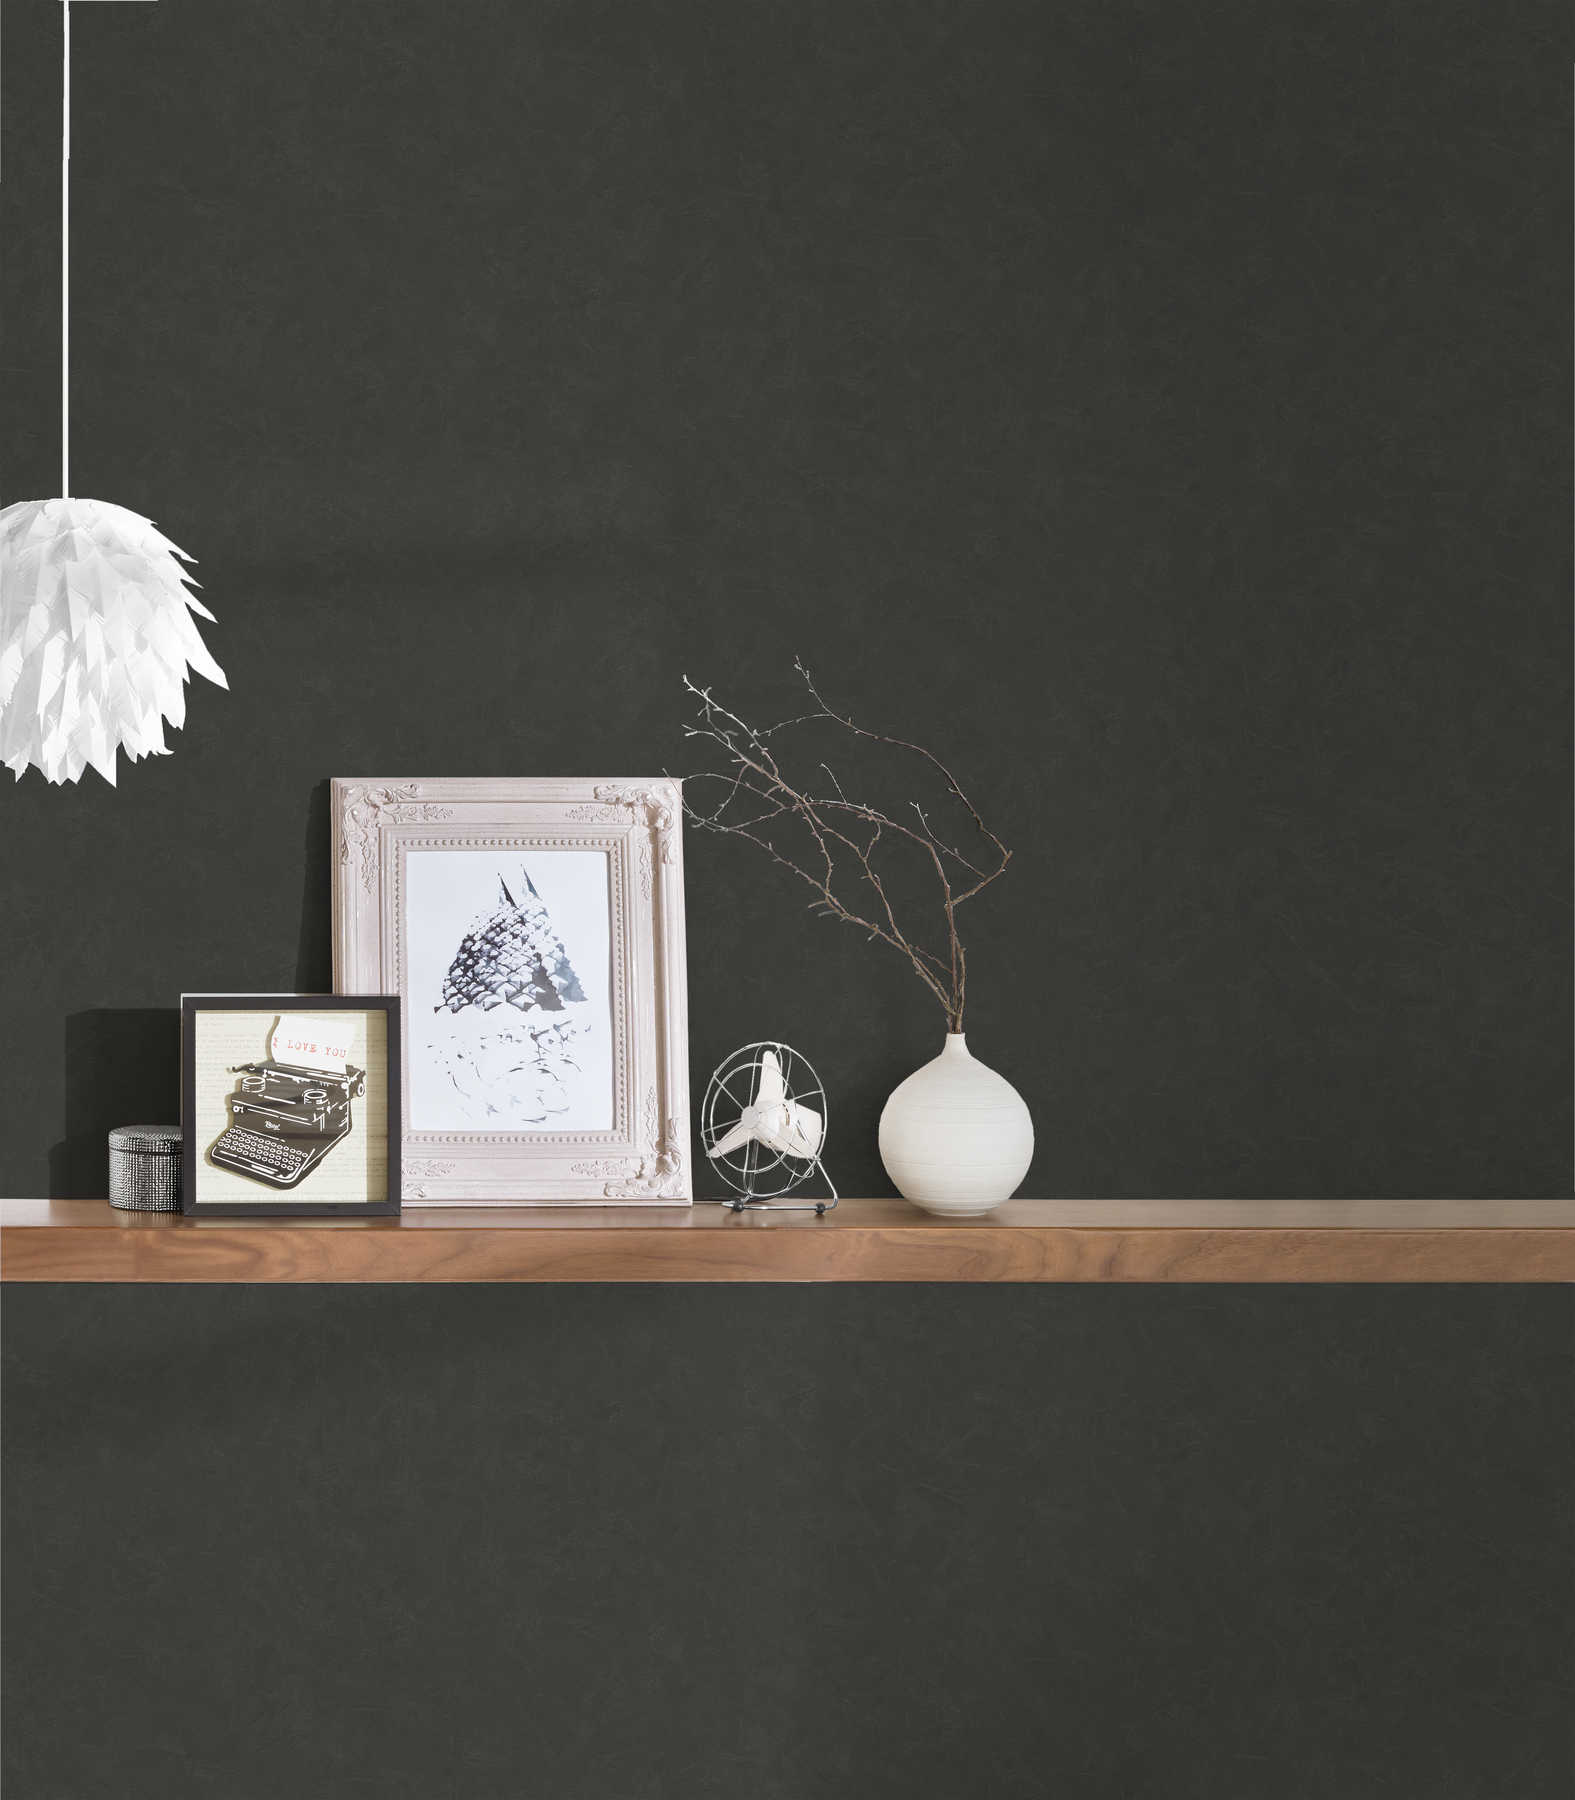             Non-woven wallpaper plain trowel plaster - black, anthracite
        